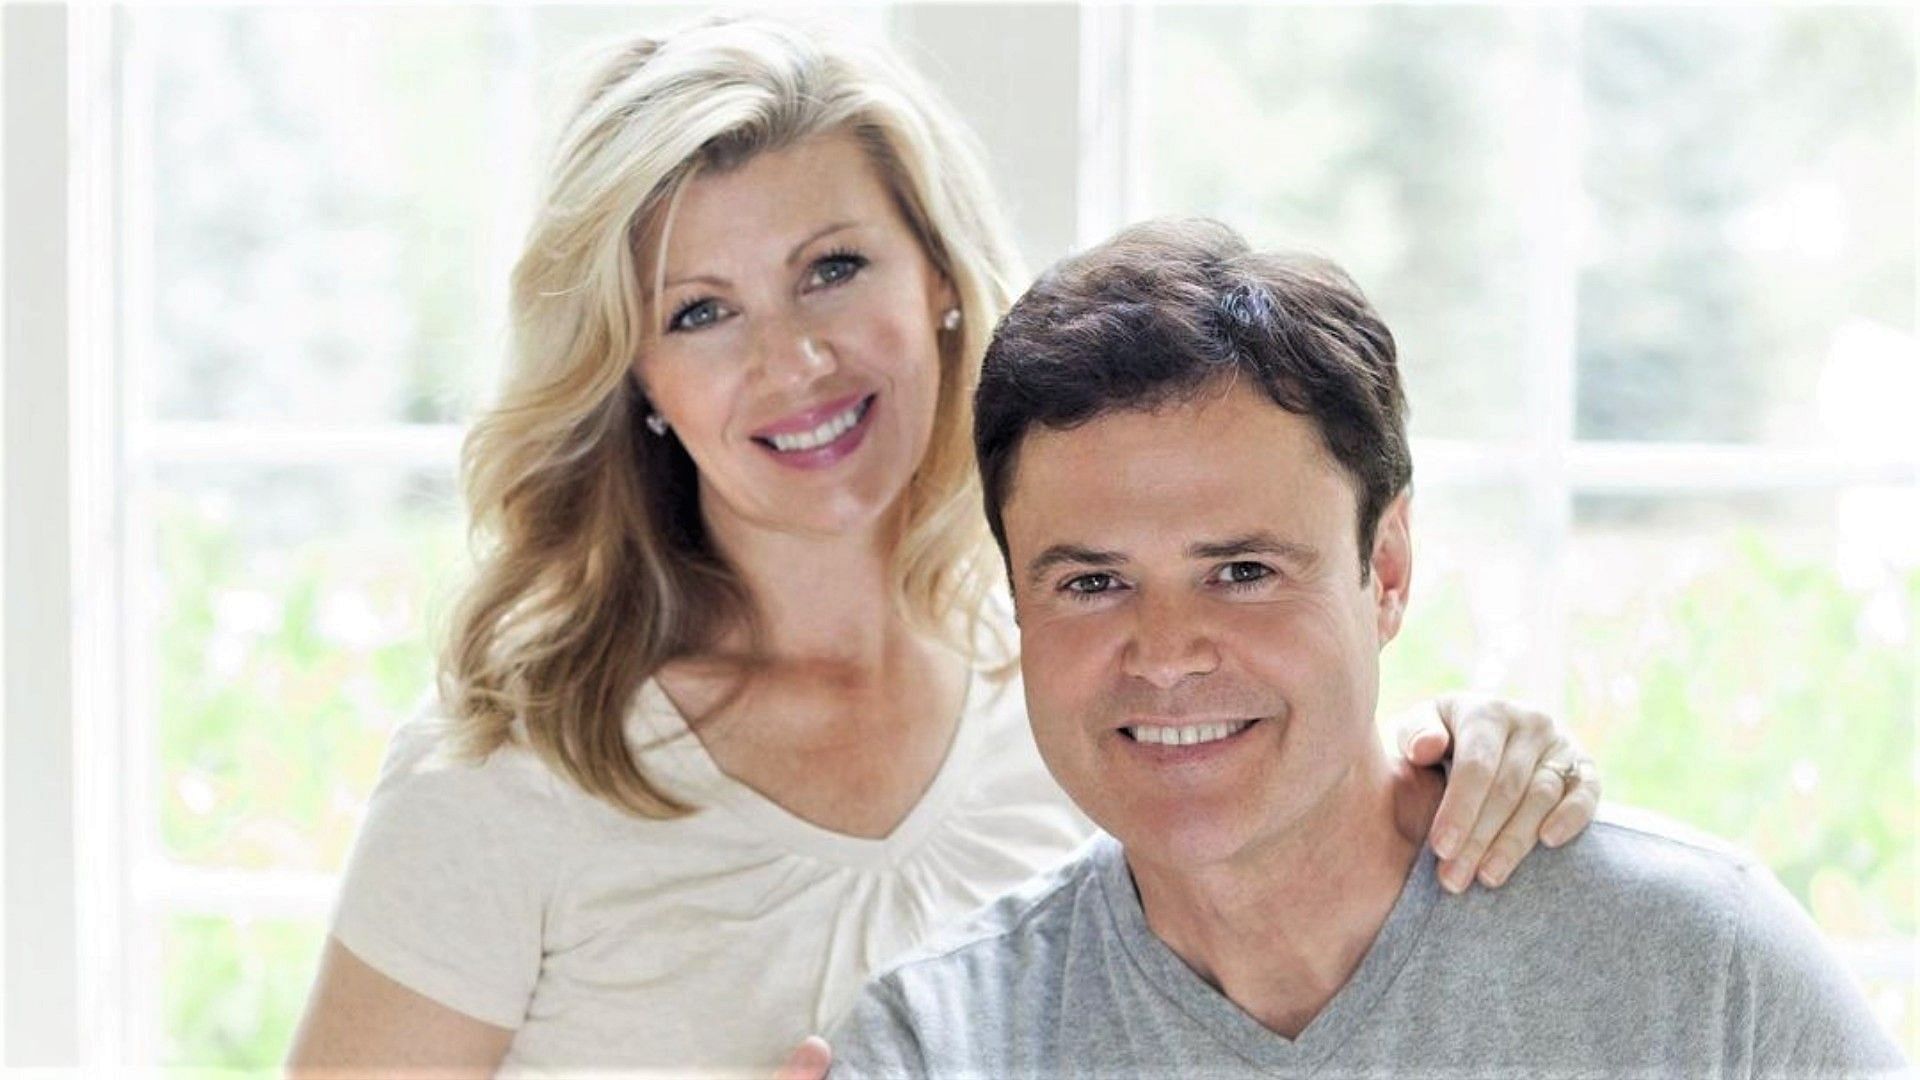 Donny Osmond and his wife Debbie (Image via Instagram/donnyosmond)